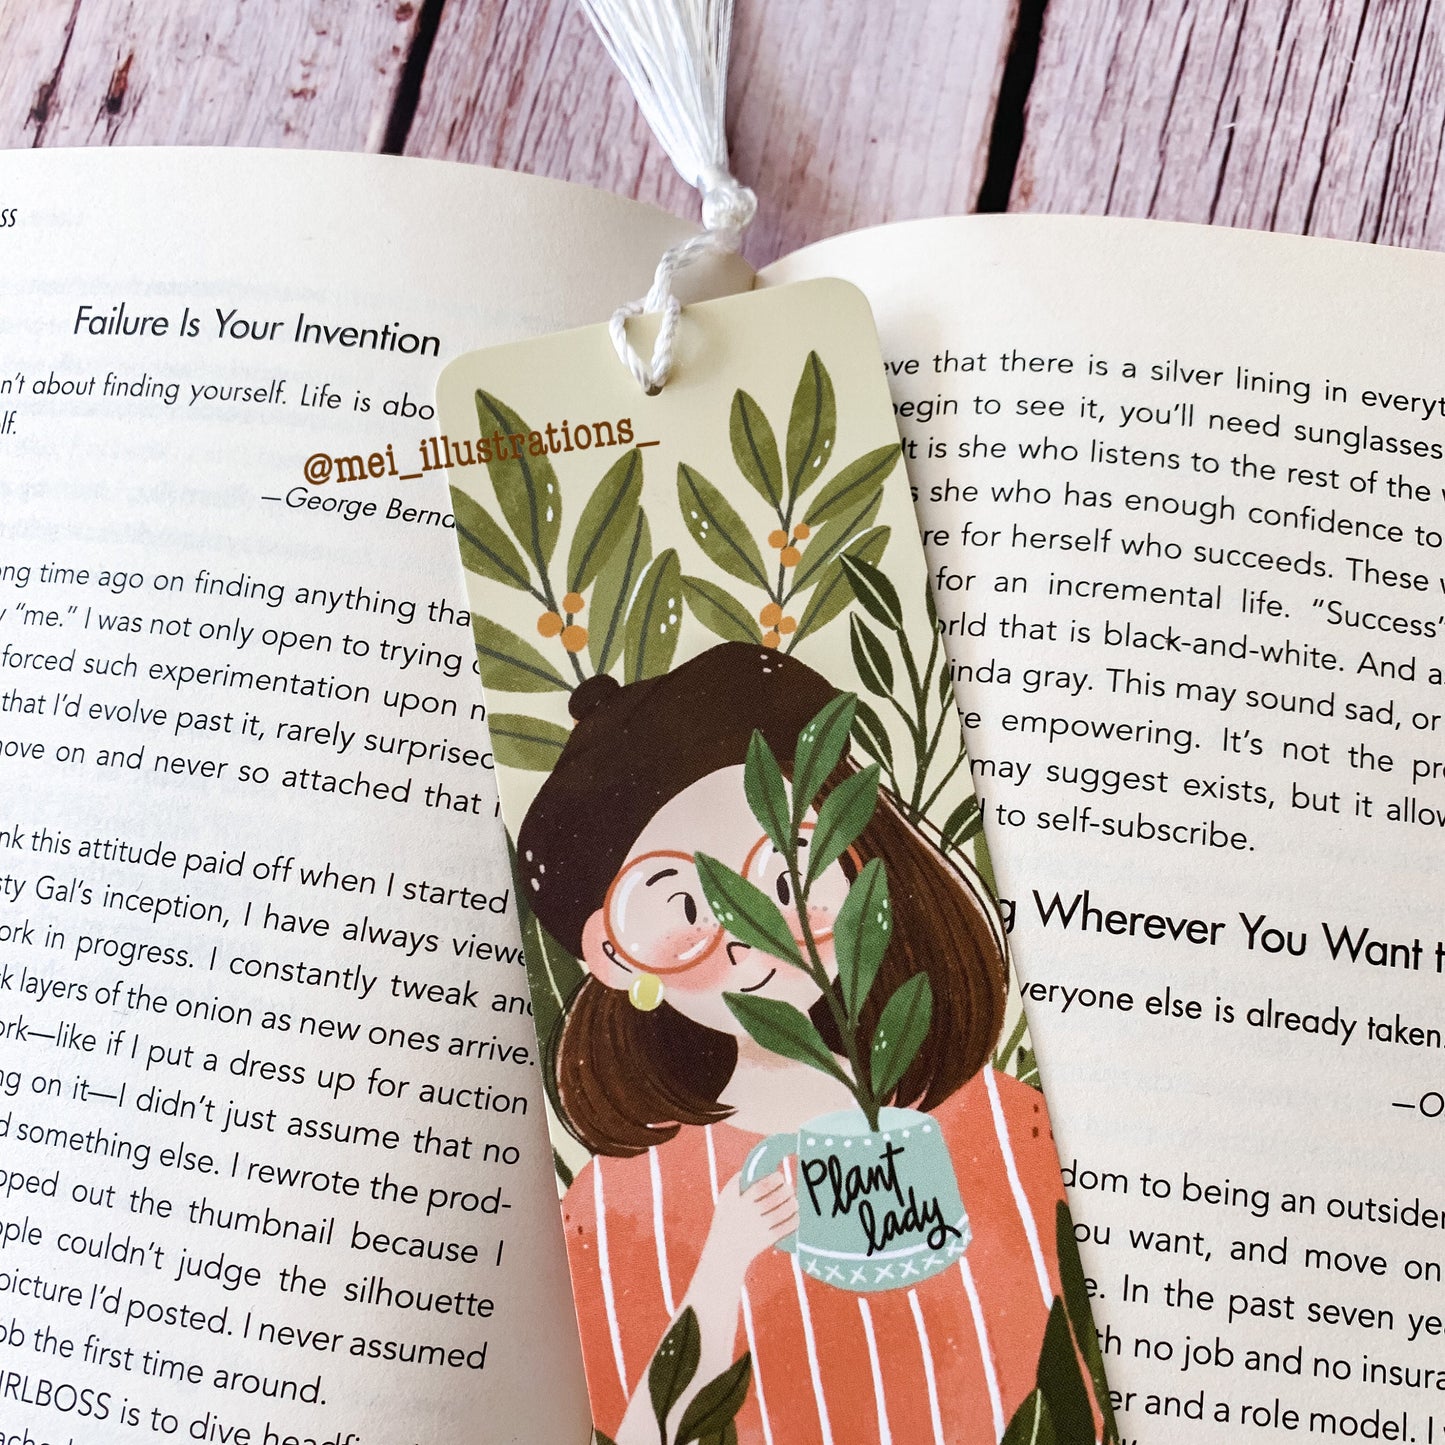 Plant lady bookmark